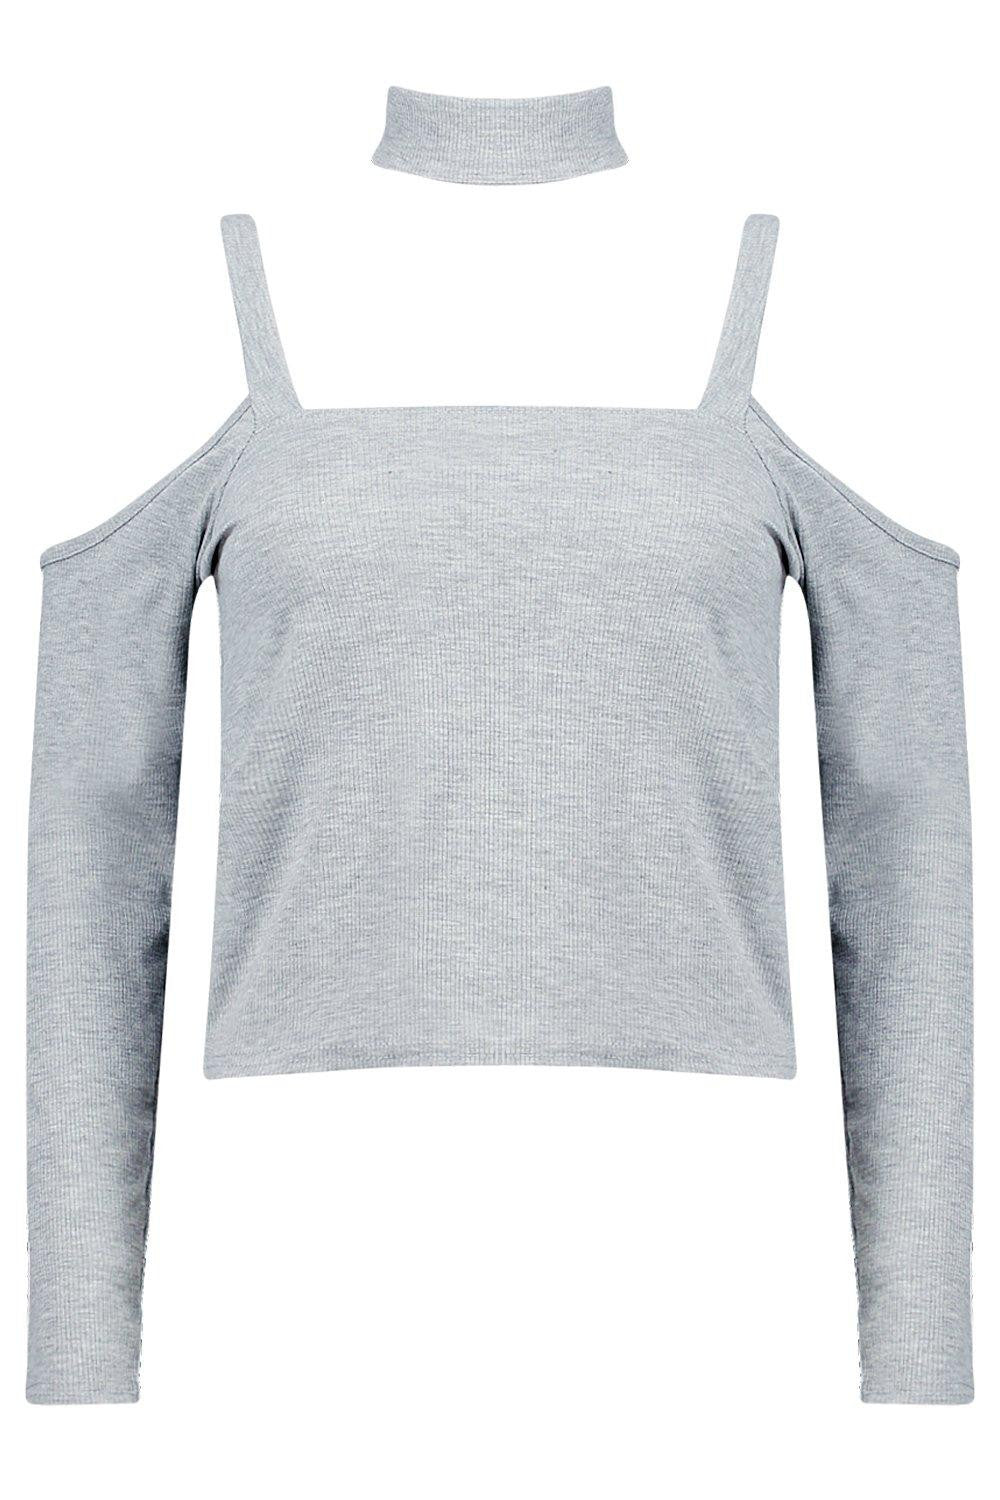 klap Verzadigen plakboek Choker Blouse Cold Shoulder Tops Low Back Long Sleeve Shirt Women Gray –  wenjiang